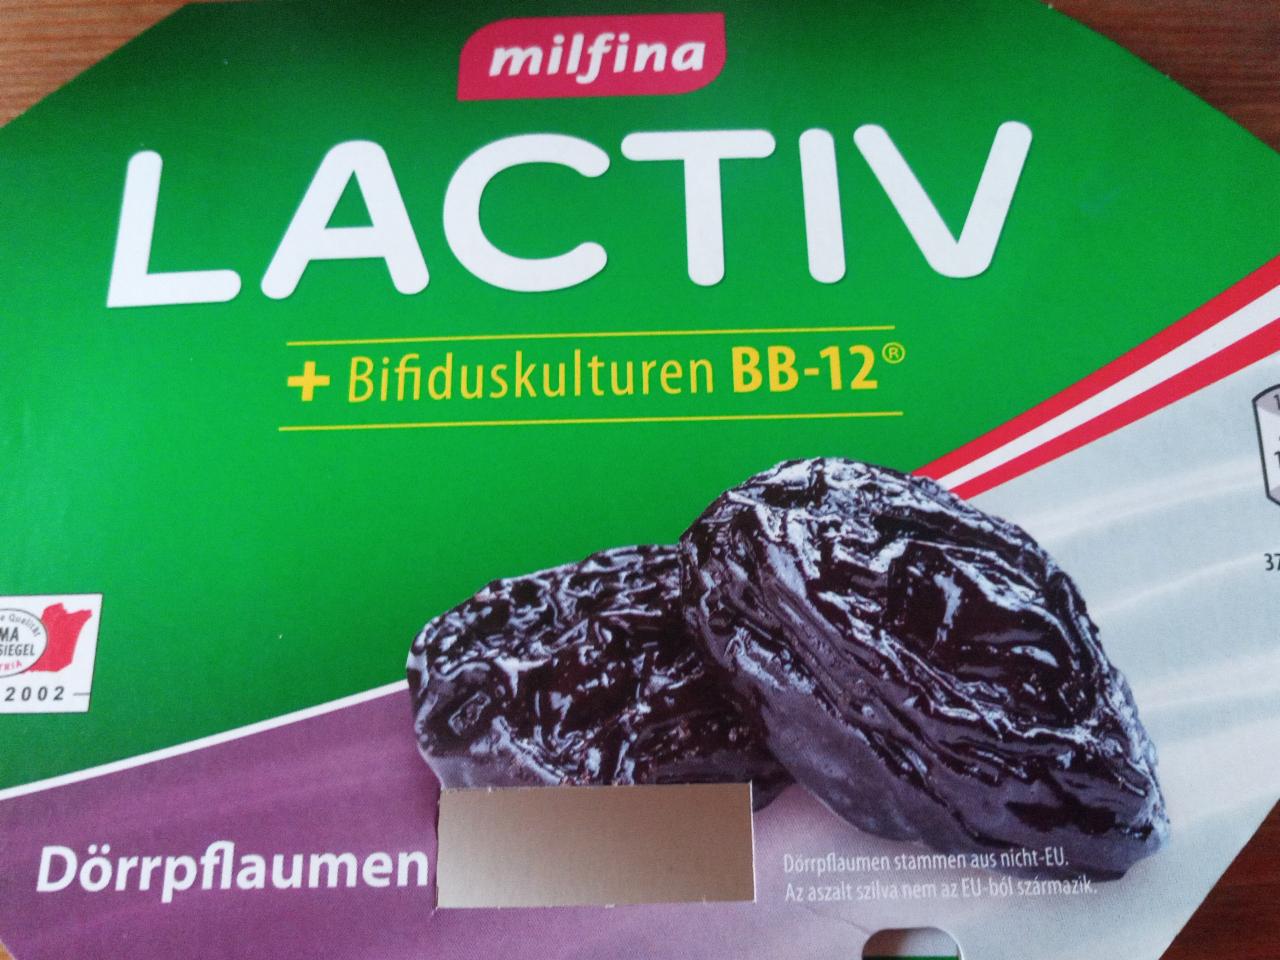 Fotografie - Lactiv+ bifiduskulturen BB-12 Dörrpflaumen Milfina